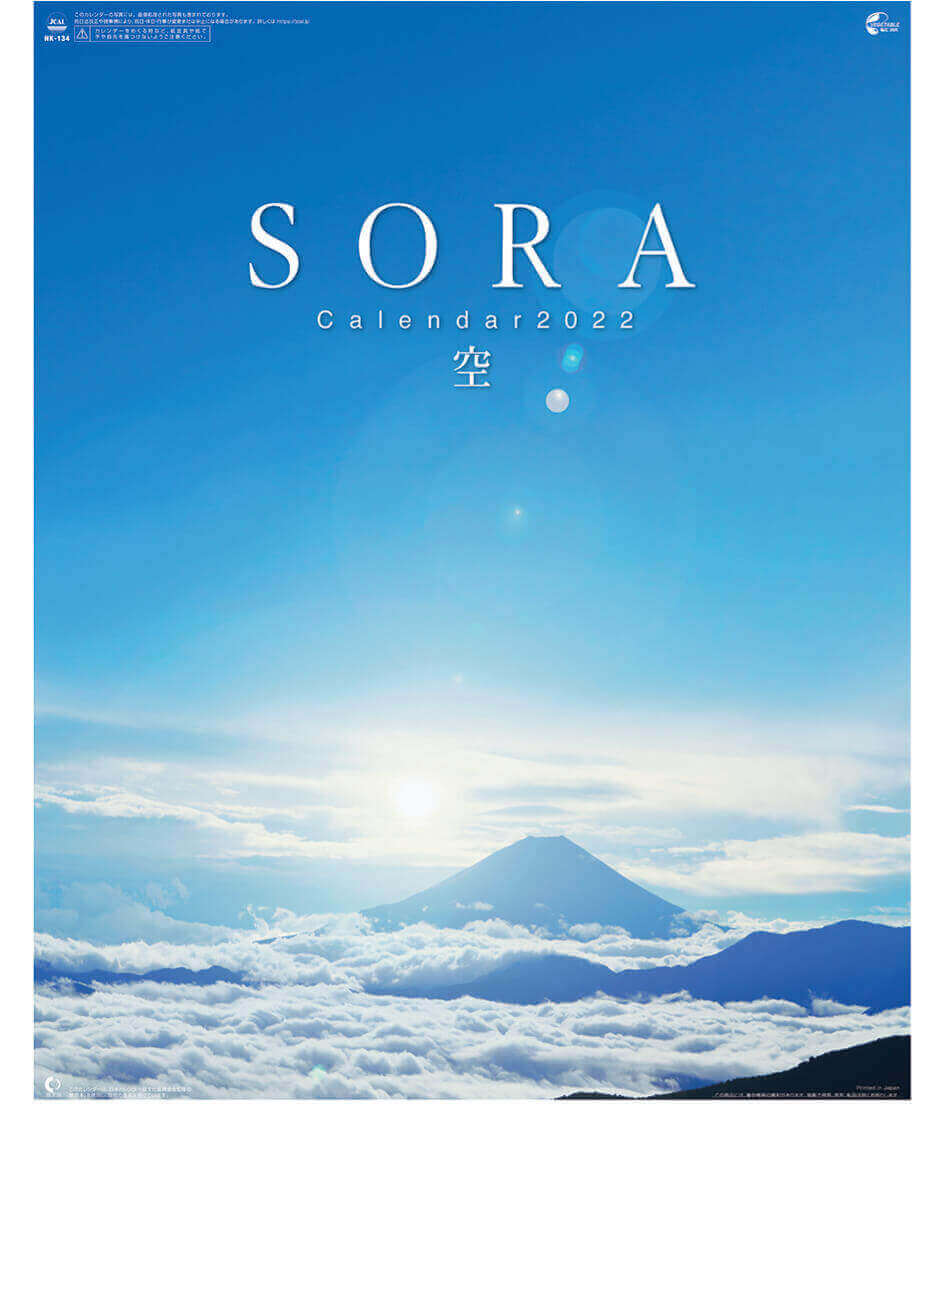  SORA -空- 2022年カレンダーの画像